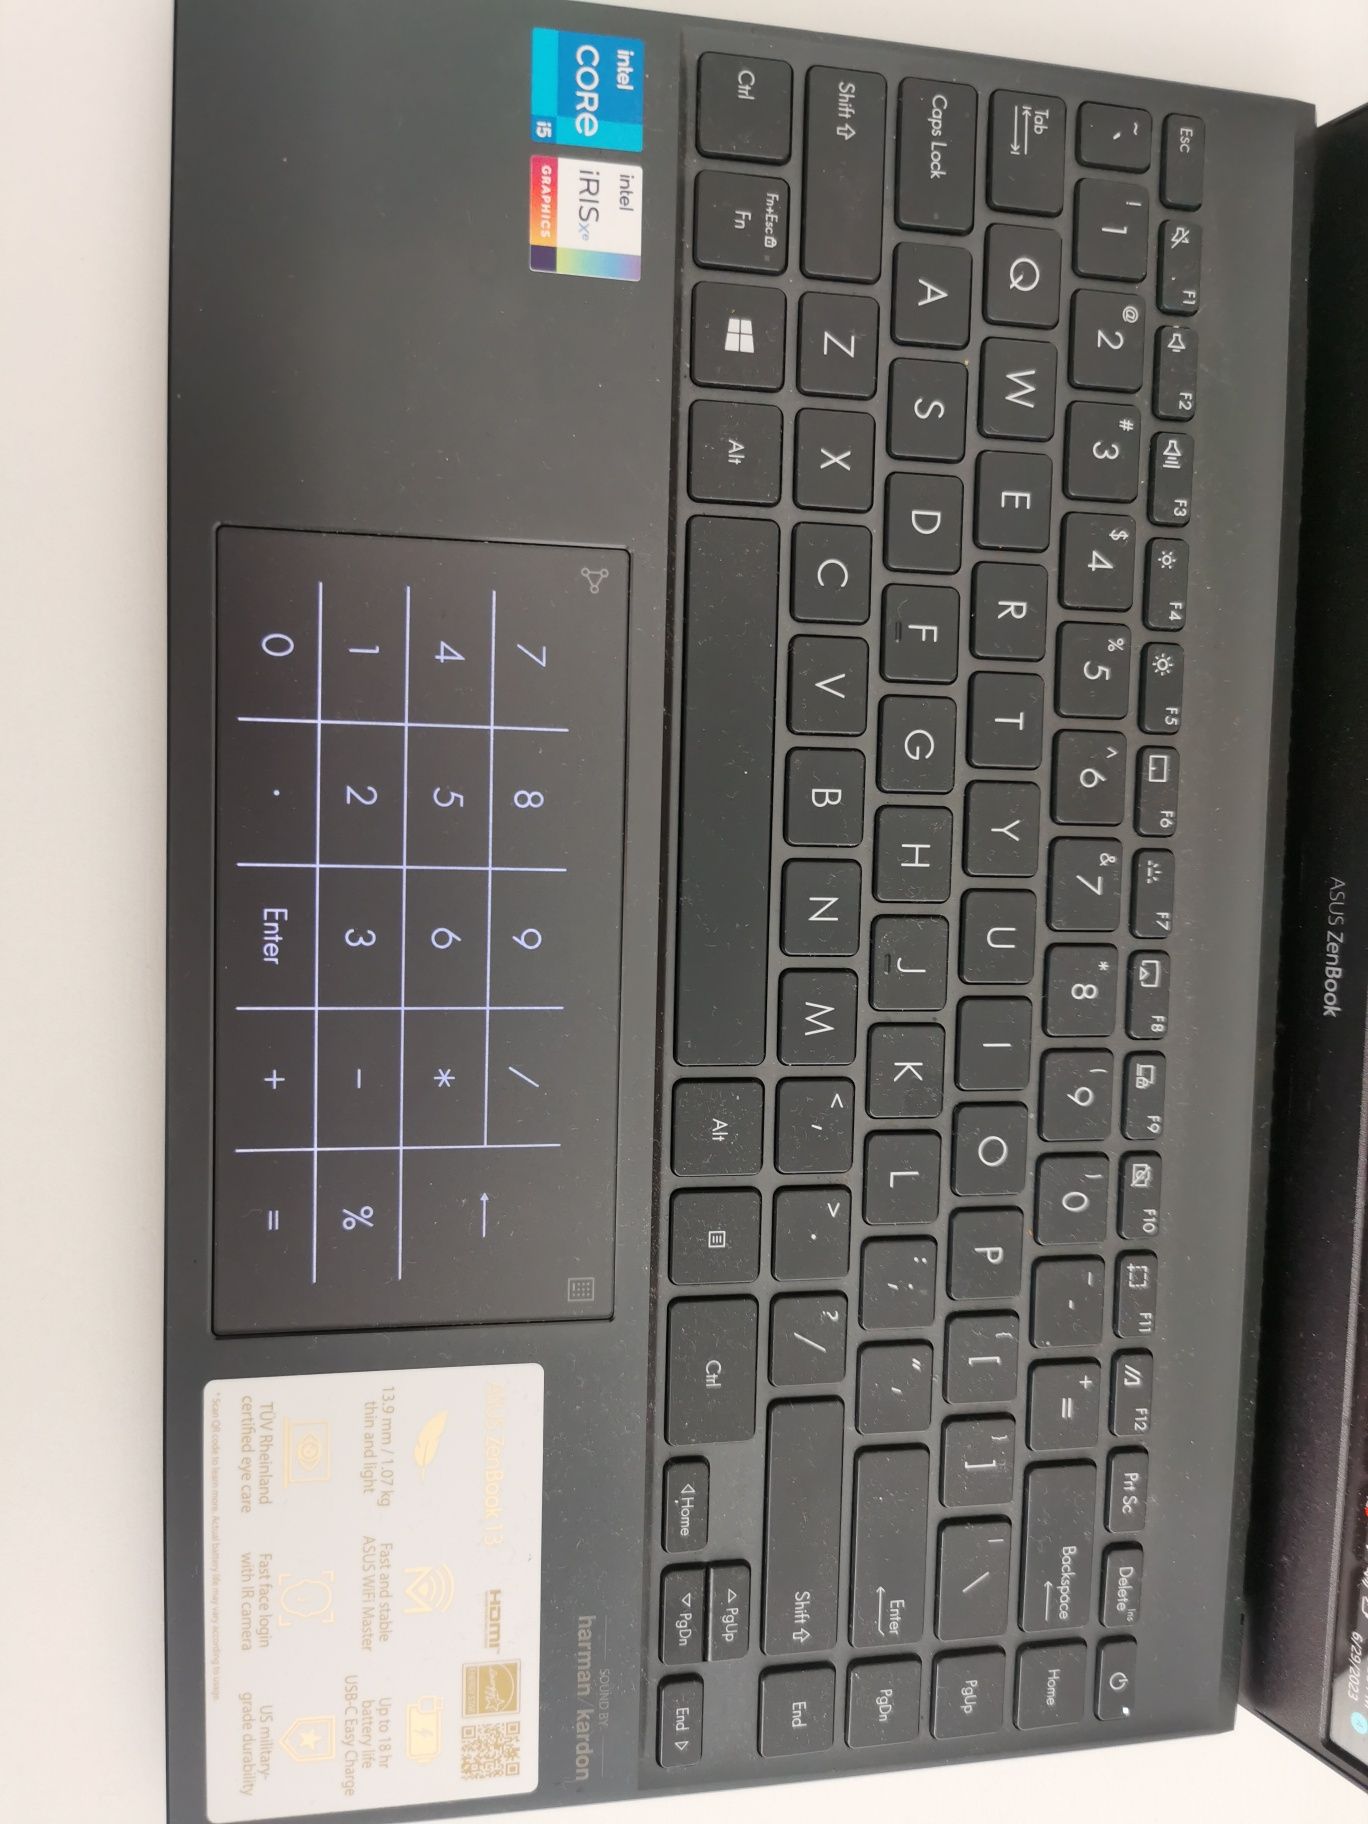 Asus ZenBook model UX325E notebook pc